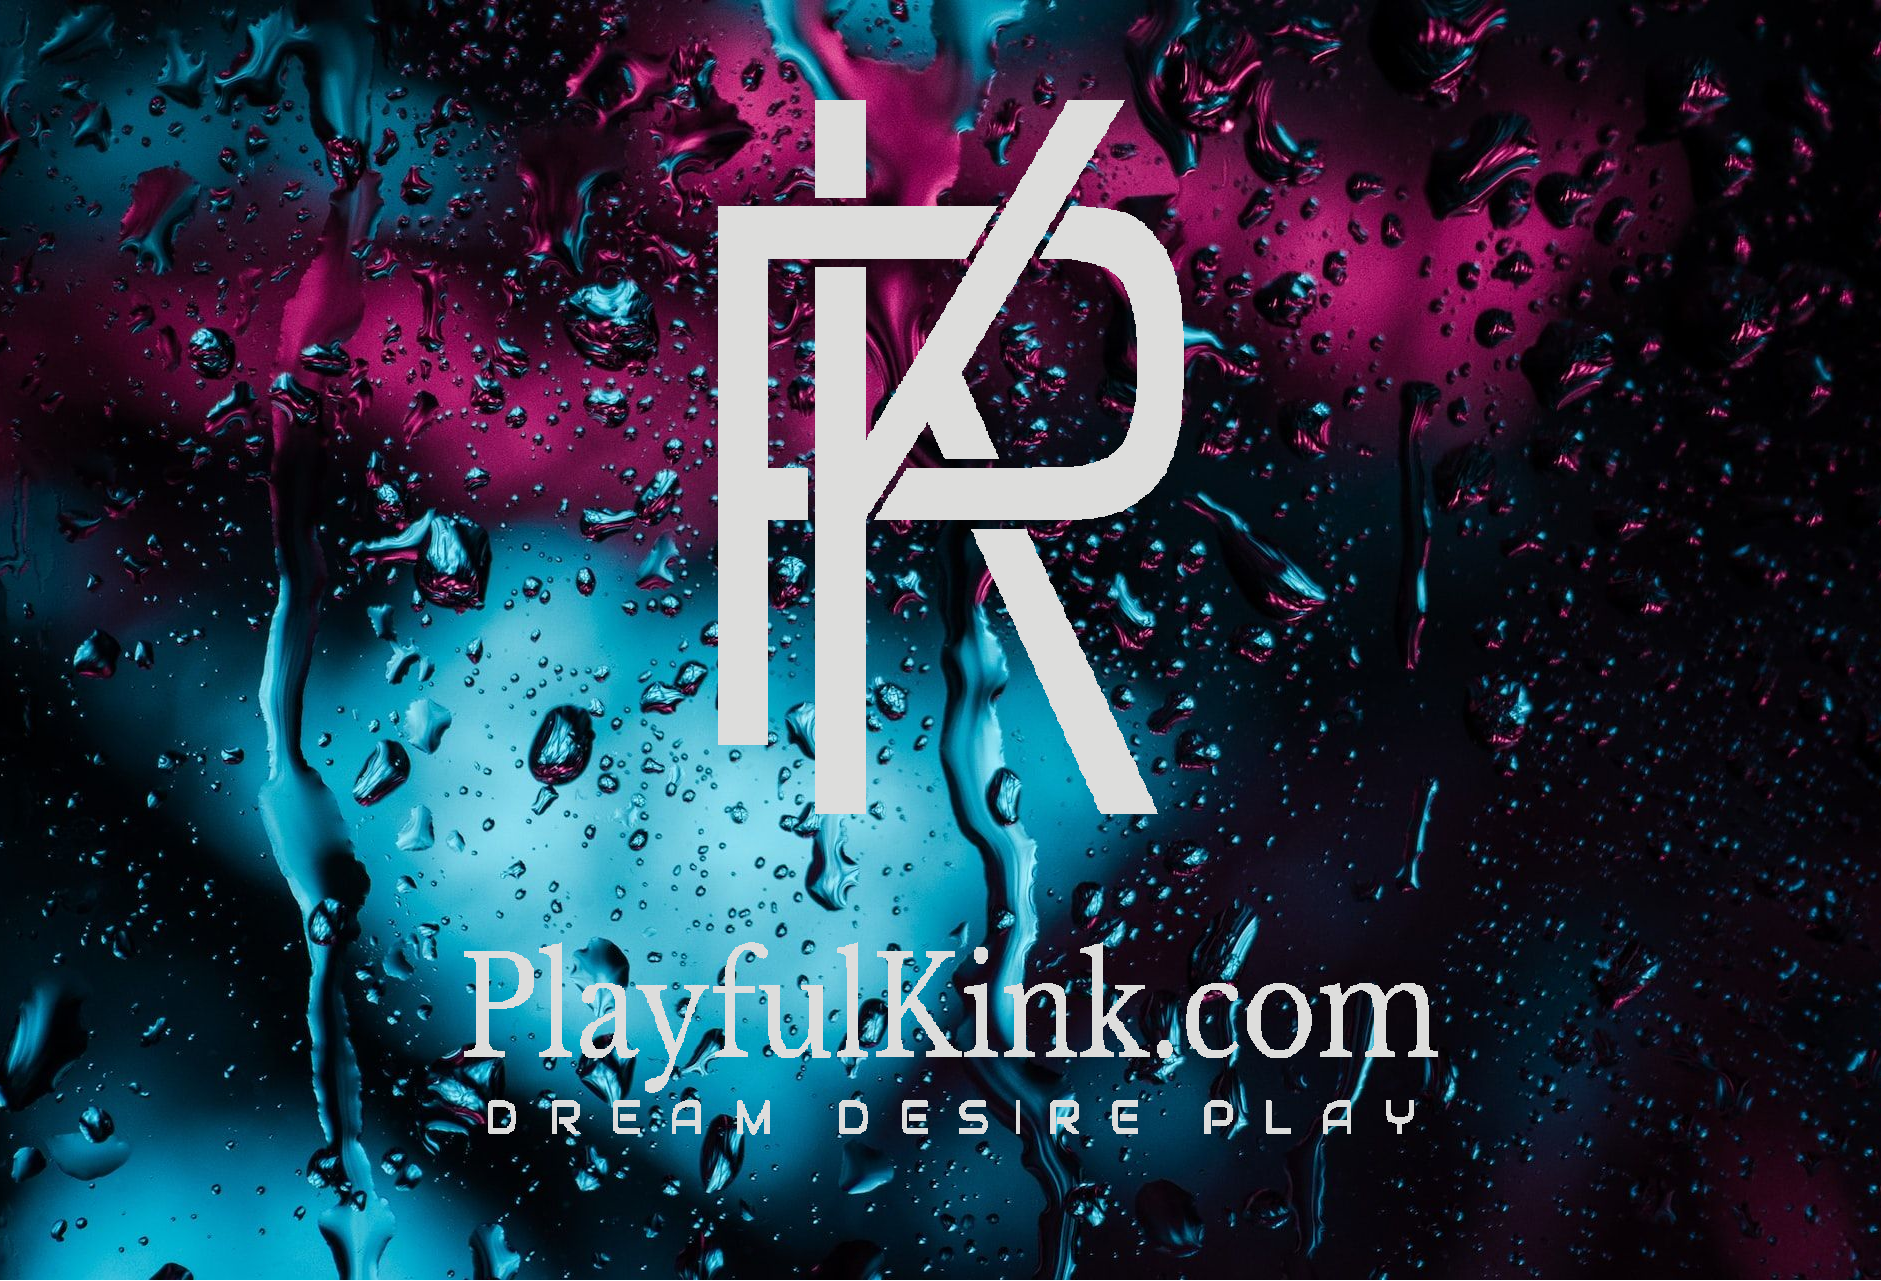 PlayfulKink.com